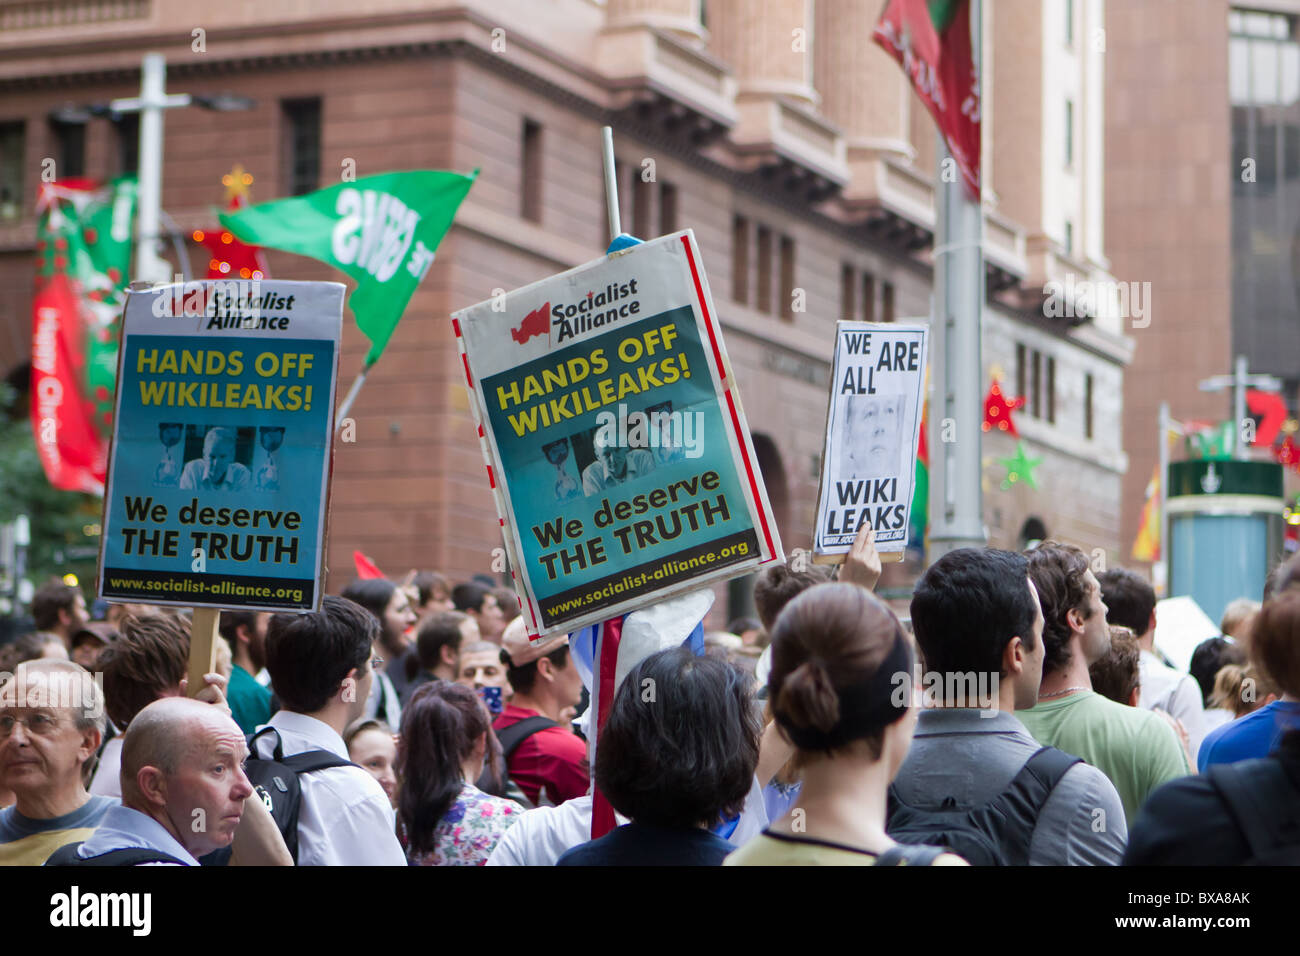 Wikileaks protest in Sydney Australia on December 14, 2010. Stock Photo